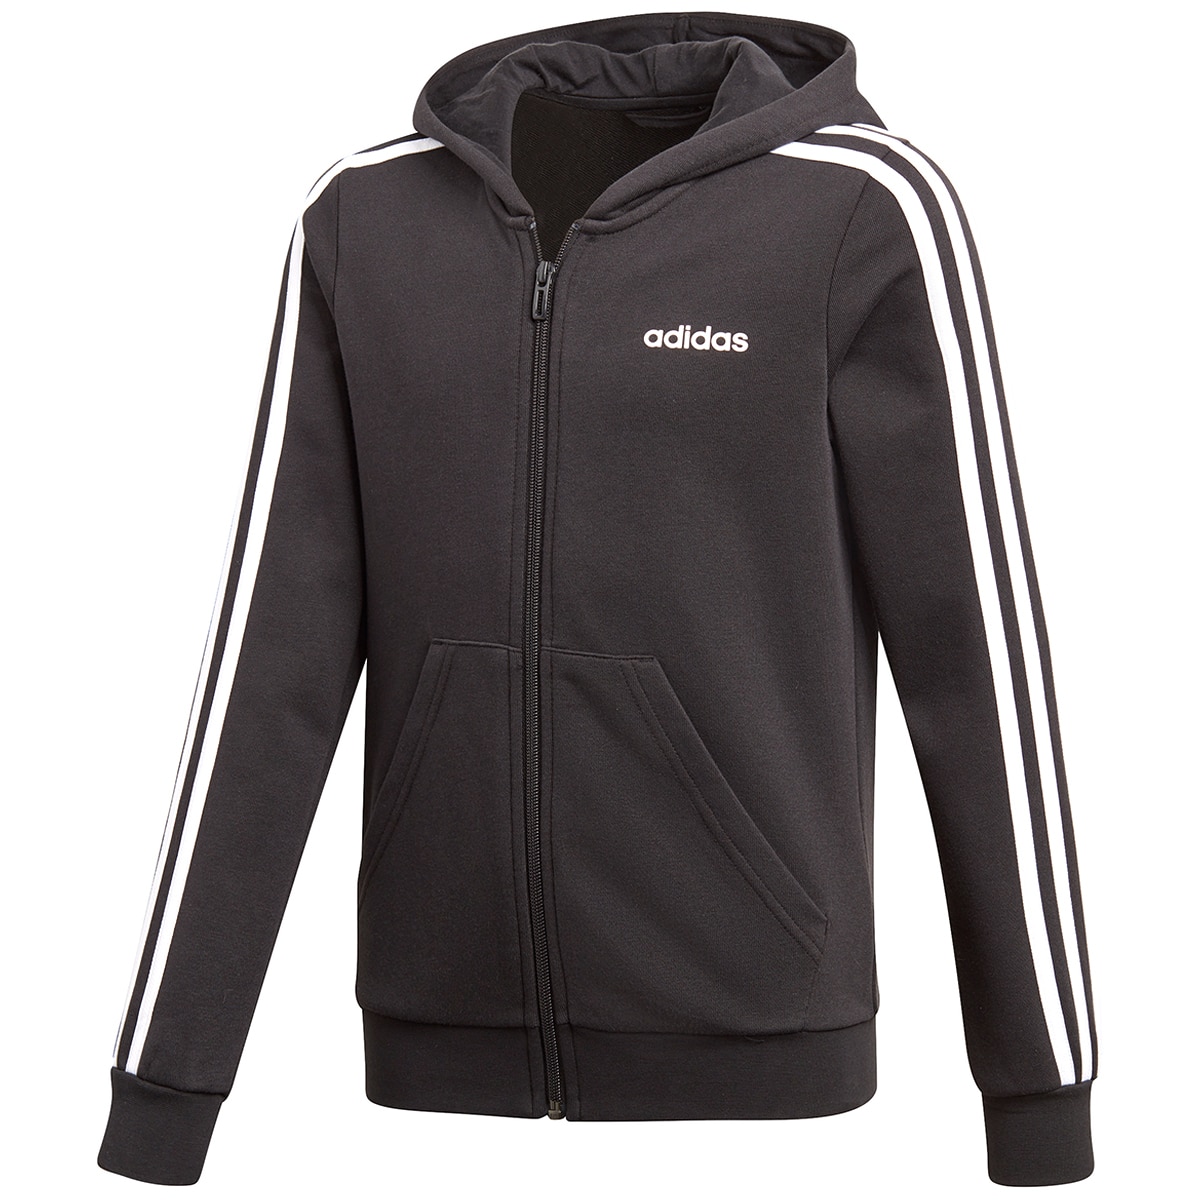 Adidas Girls' Full Zip Hooded Jacket 